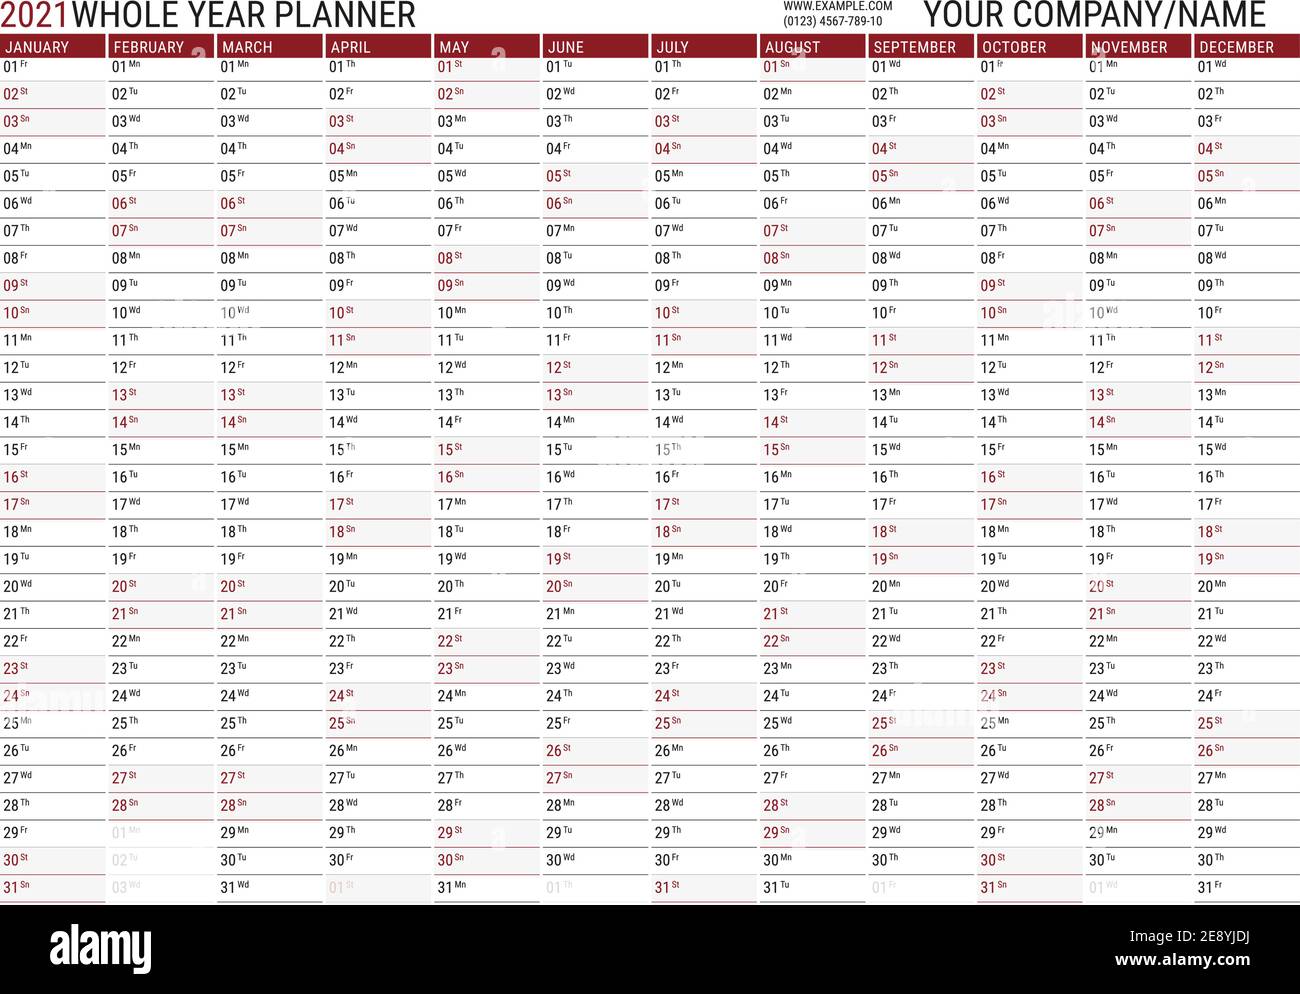 2021 Calendar Big Planner Whole Year Scheduler, all months, A3 size Stock Vector